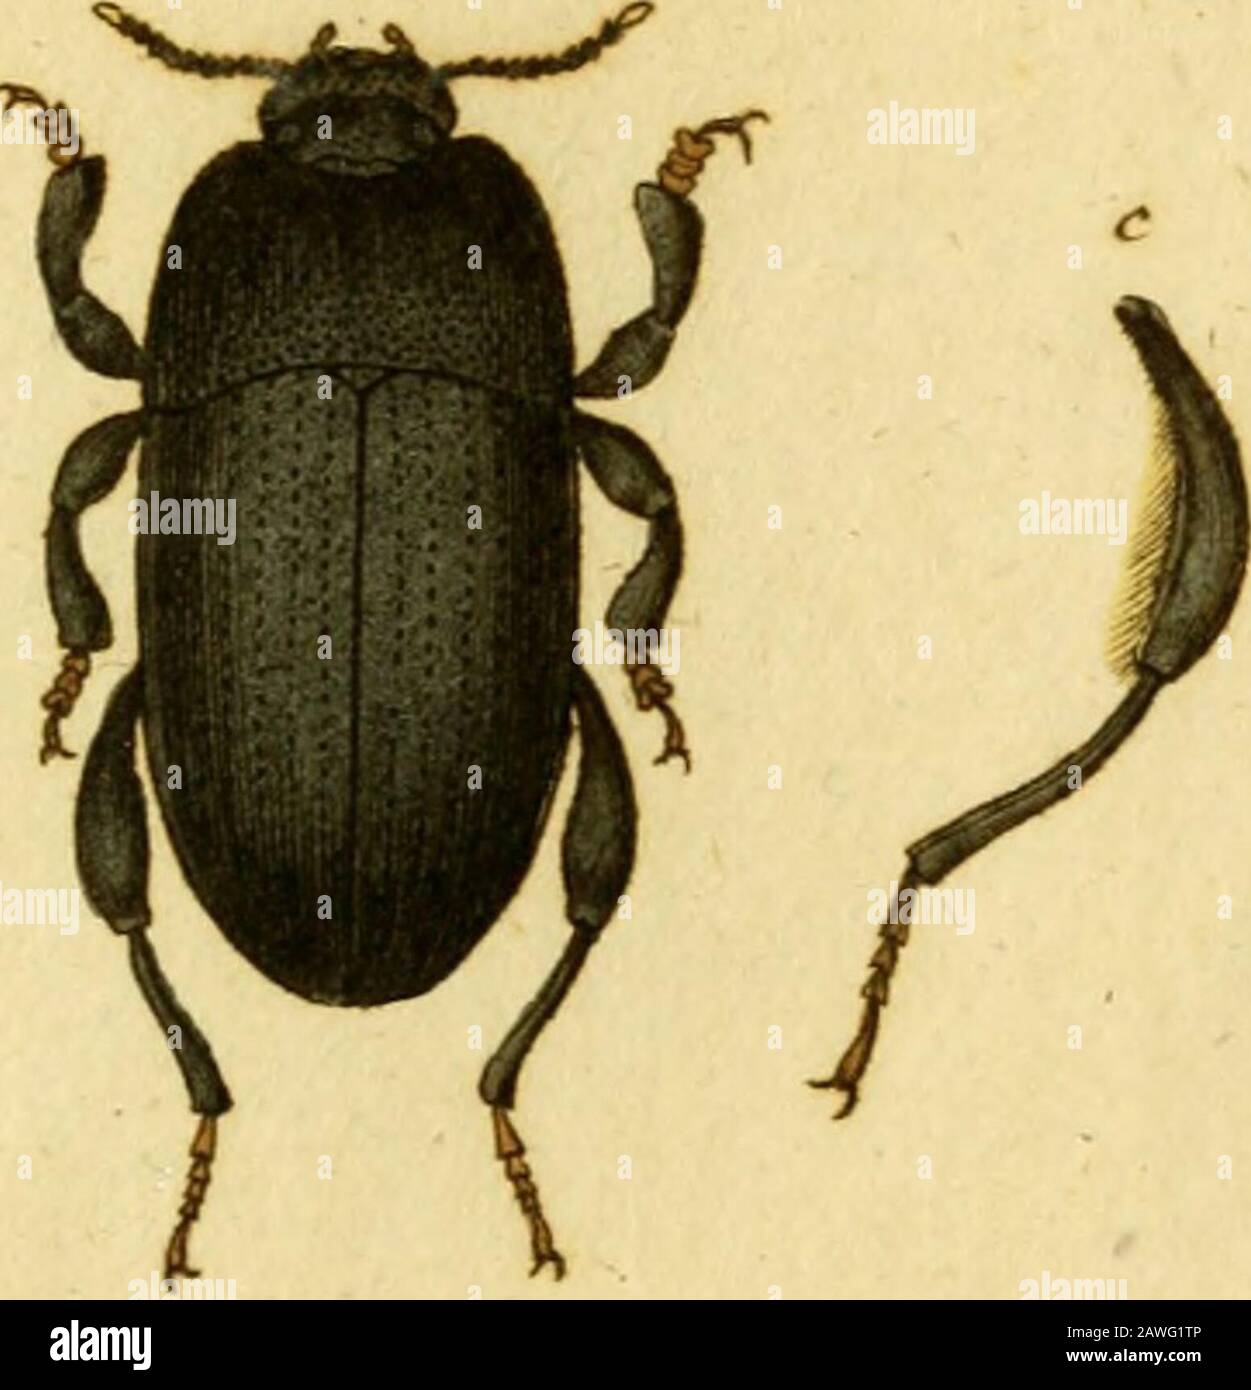 Favnae insectorvm Germanicae initia, oder, Deutschlands Insecten . OPATRVM gibbuni.Der höckerkbte Erdßaubkäfer, Opatrum pbhum: nigrum clytris lineis elevatis plurimis obfoletls. Fäbnc, Ent. fyft. T. I. n. 4. p. 89. Syft. Ent. n. 2. p. 76. Spec.-Inf. T. I. n. 3. p. 90. Mant. Inf. T. I. n. 3. p. 50.Opatrum coyivexum: oblongum fupra convexum nigrum, elytris pnnctato-ftiiatis, lineis elevatis obfoletis, tibiis anticis triangularibus. Ku^elan. n. 3.Opatrum gibbum. Panzer Ent. germ. I. n. 2. p. 35. Habitat in aienofis. Quam in Naturf. XXIV. n. 19. tab. r. fig. 19. Opairi Tpeciem quondamdclincavcram, Stock Photo